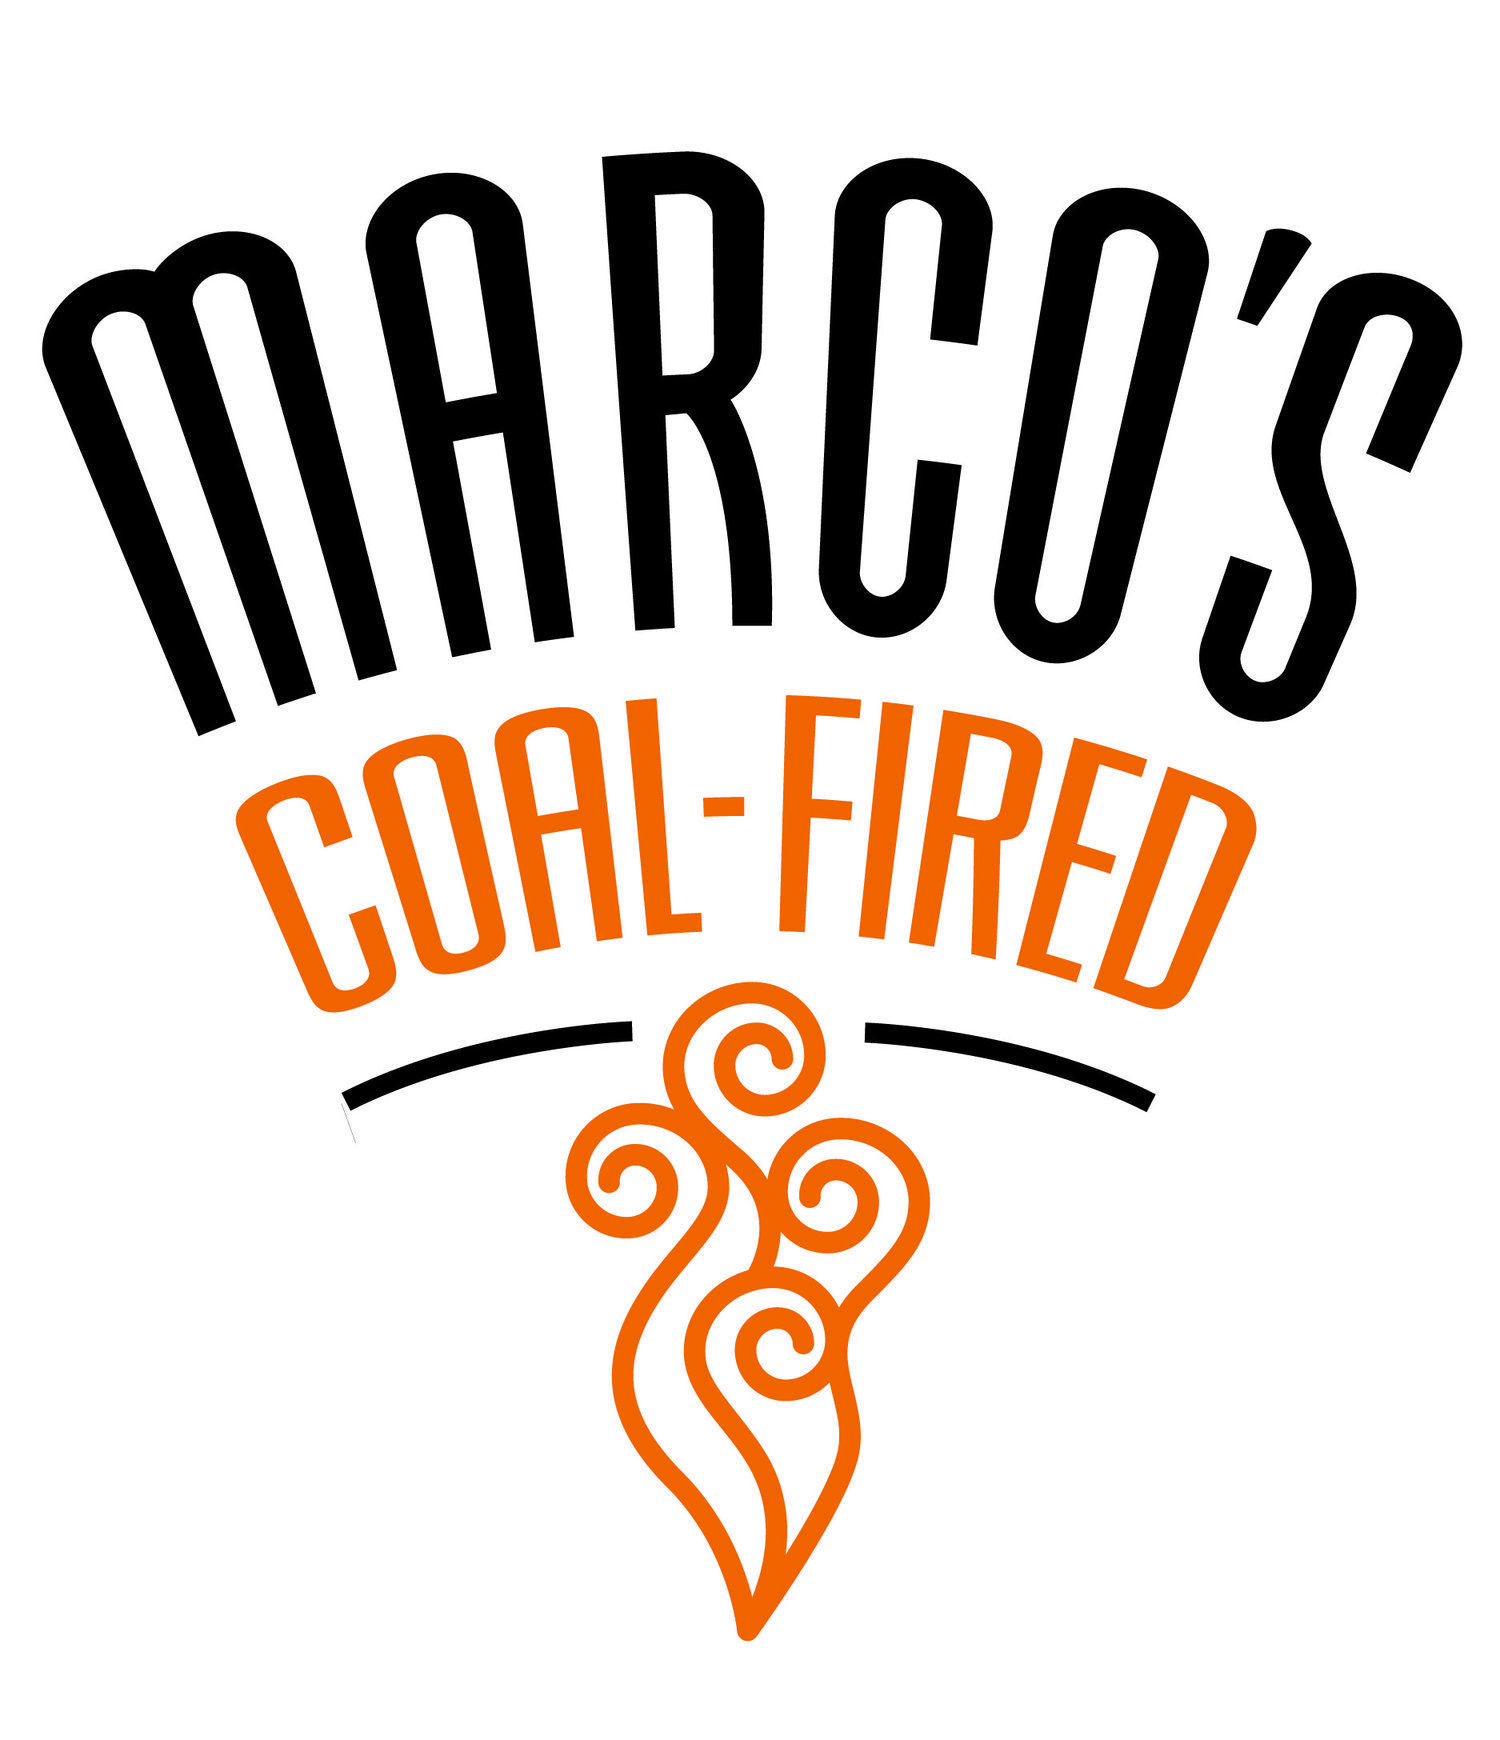 Marcos Name Logo - Marco's Coal Fired